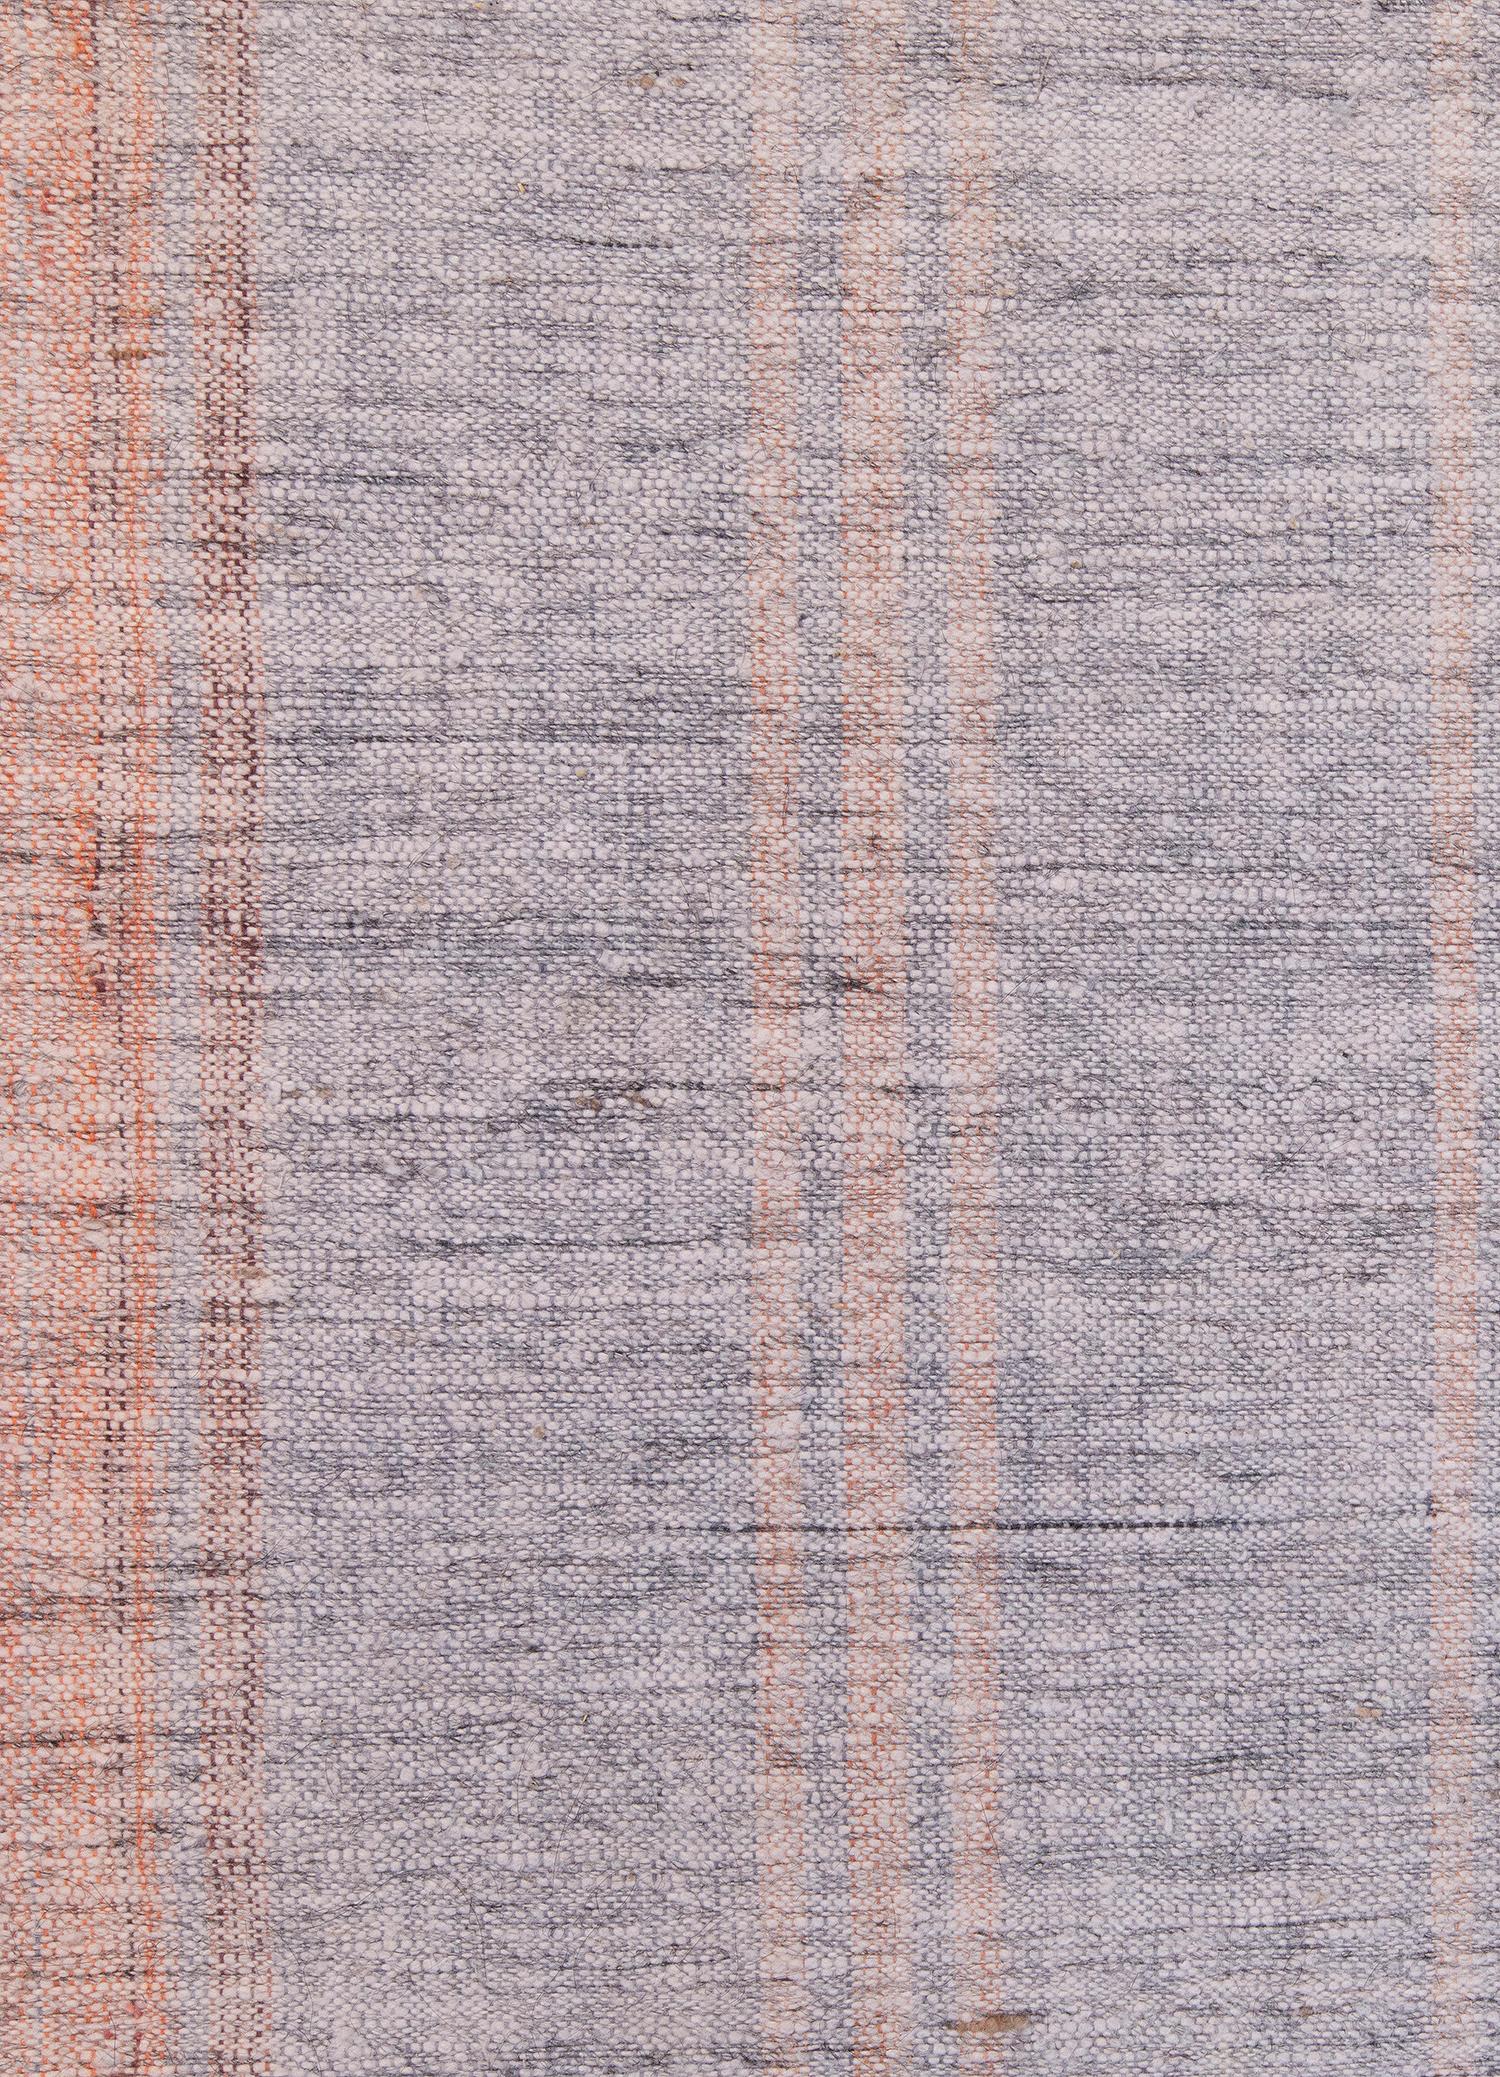 Hand-Woven Vintage Mid-Century Modern Minimalist Flatweave Rug in Purple and Orange Tones For Sale